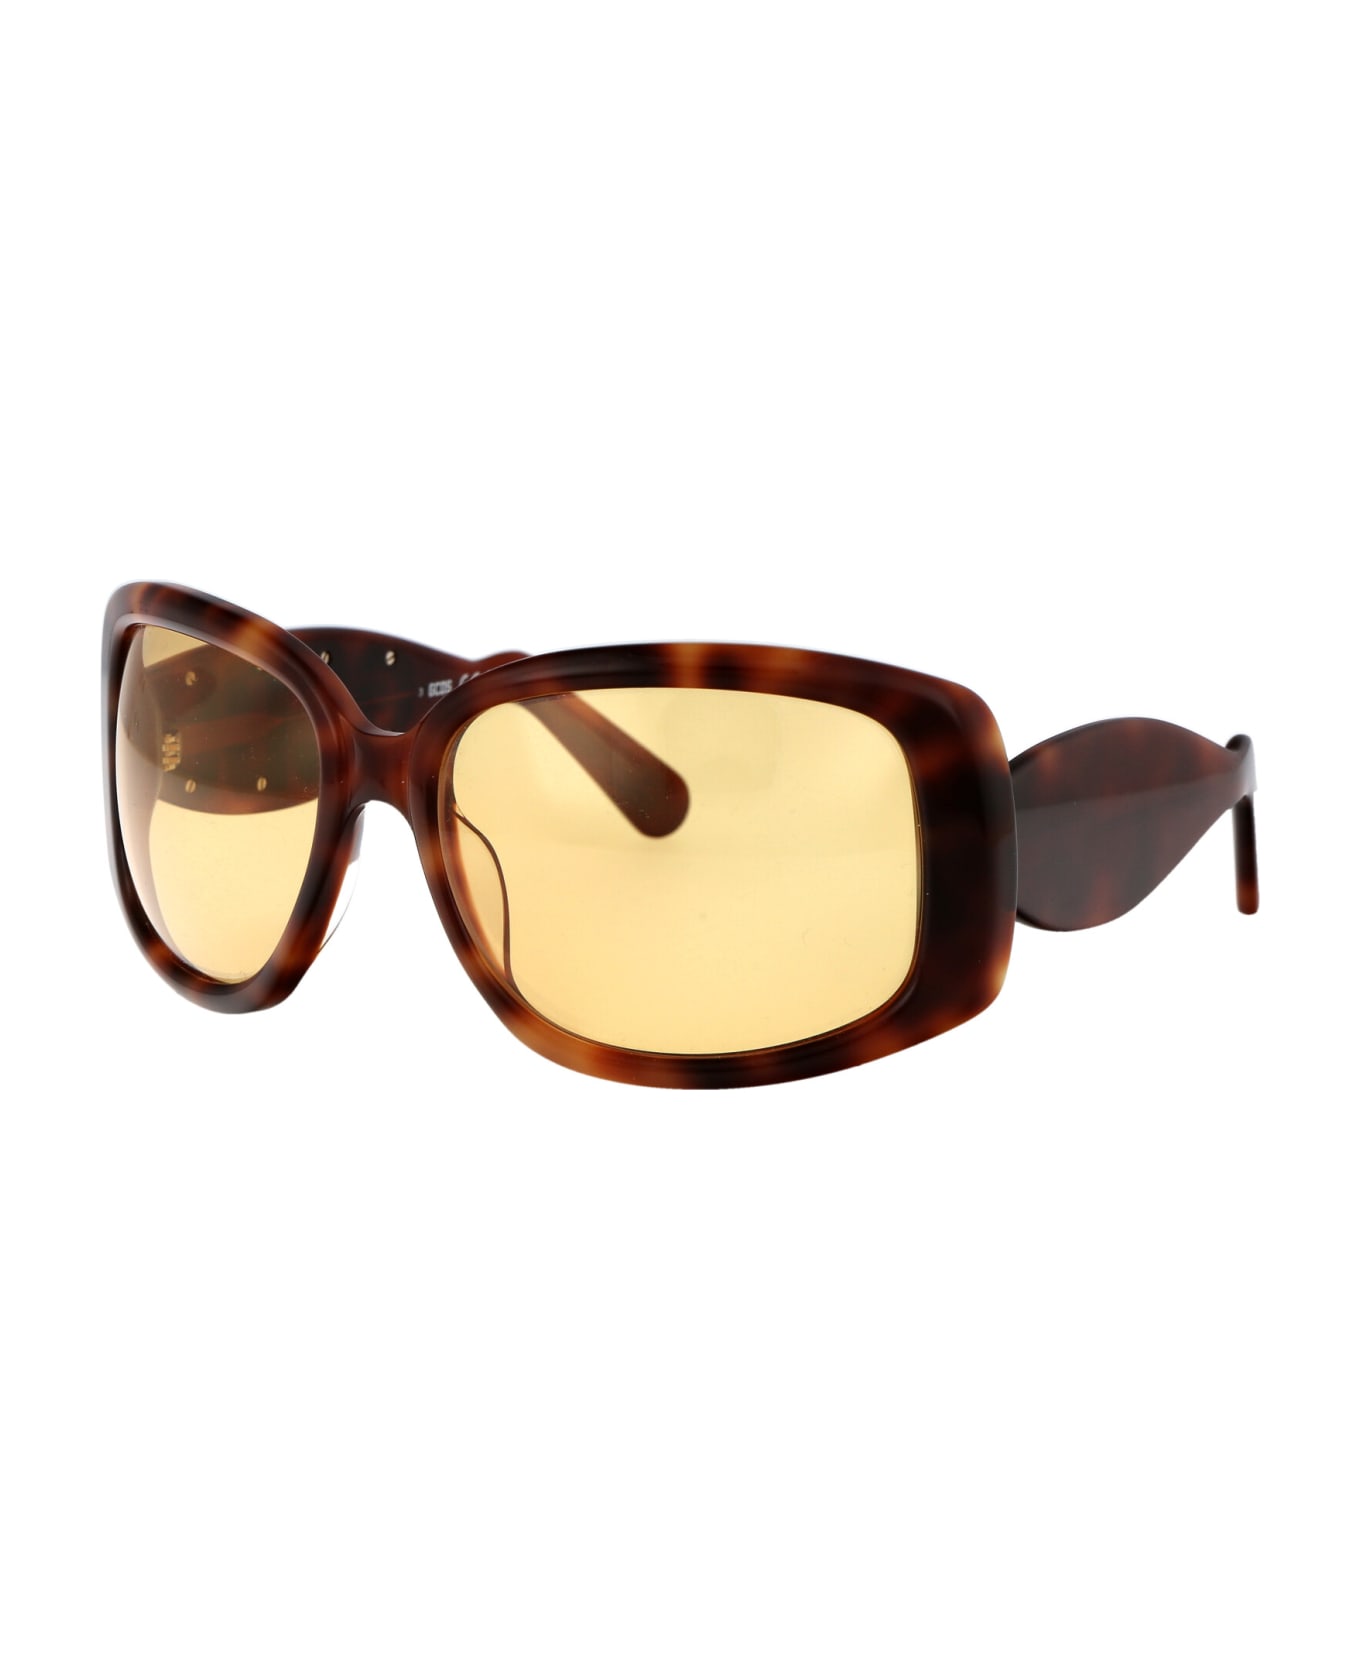 GCDS Gd0030 Sunglasses - 53E Avana Bionda/Marrone サングラス